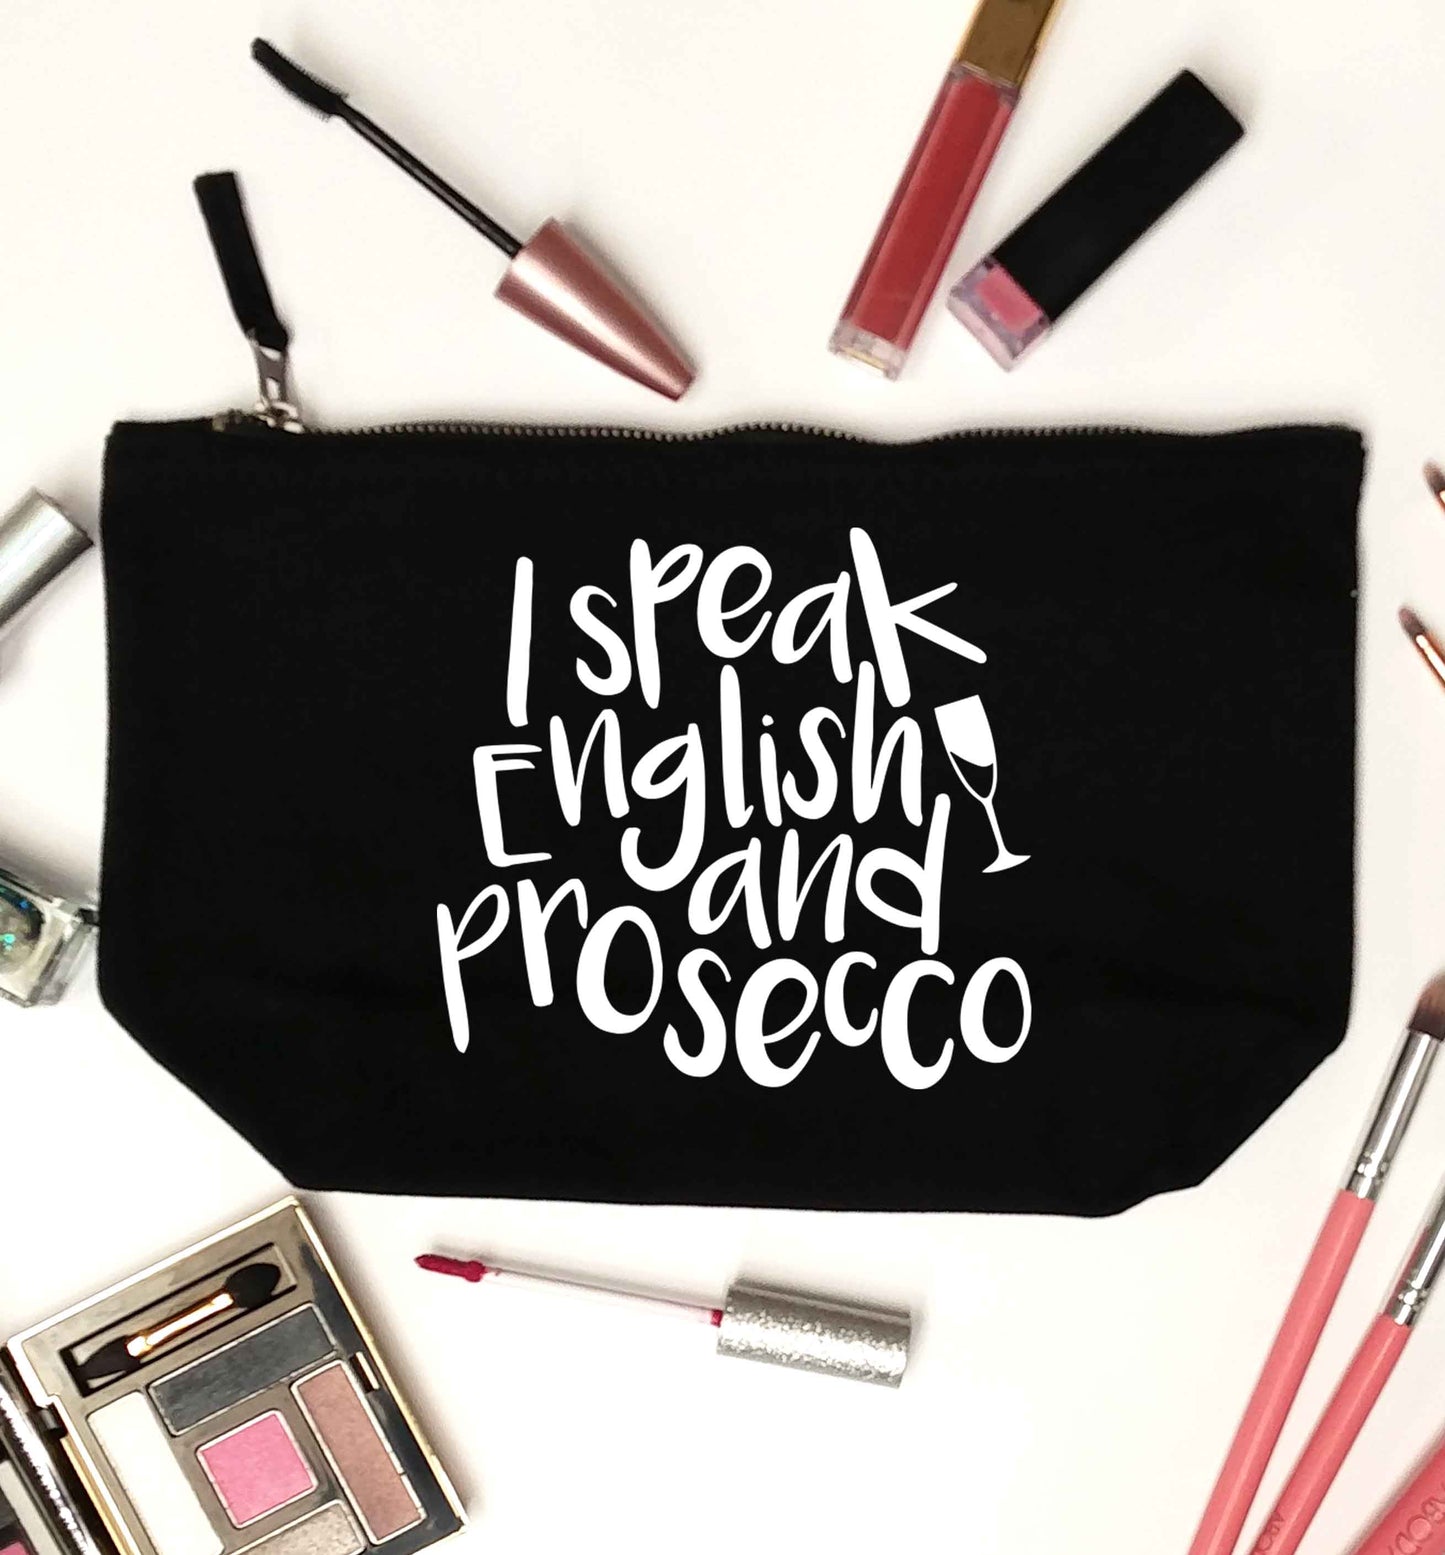 I speak English and prosecco black makeup bag